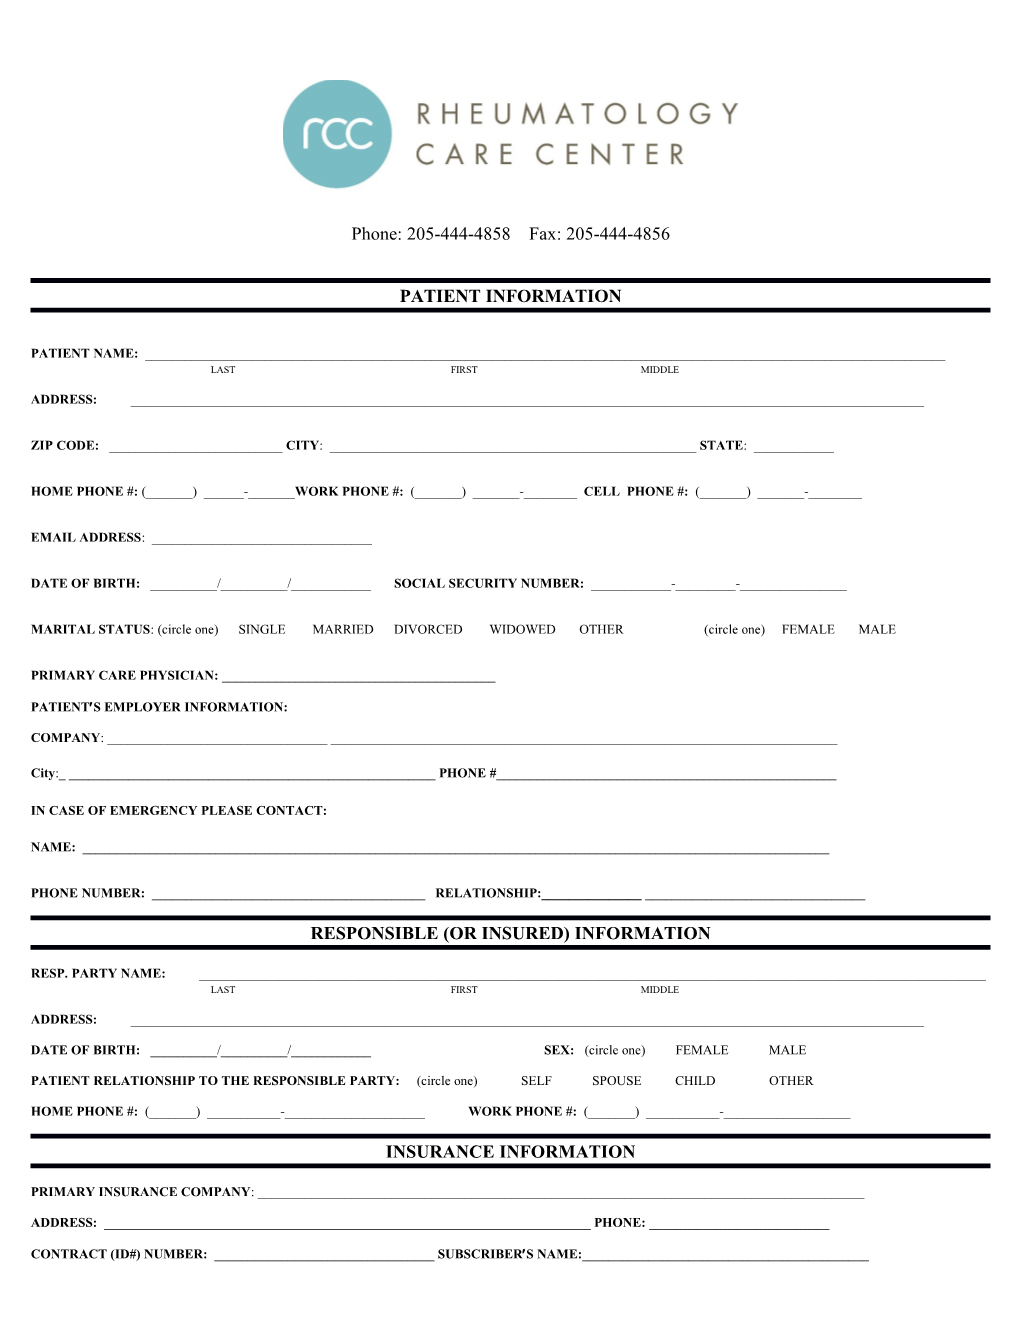 Patient Information Form s1